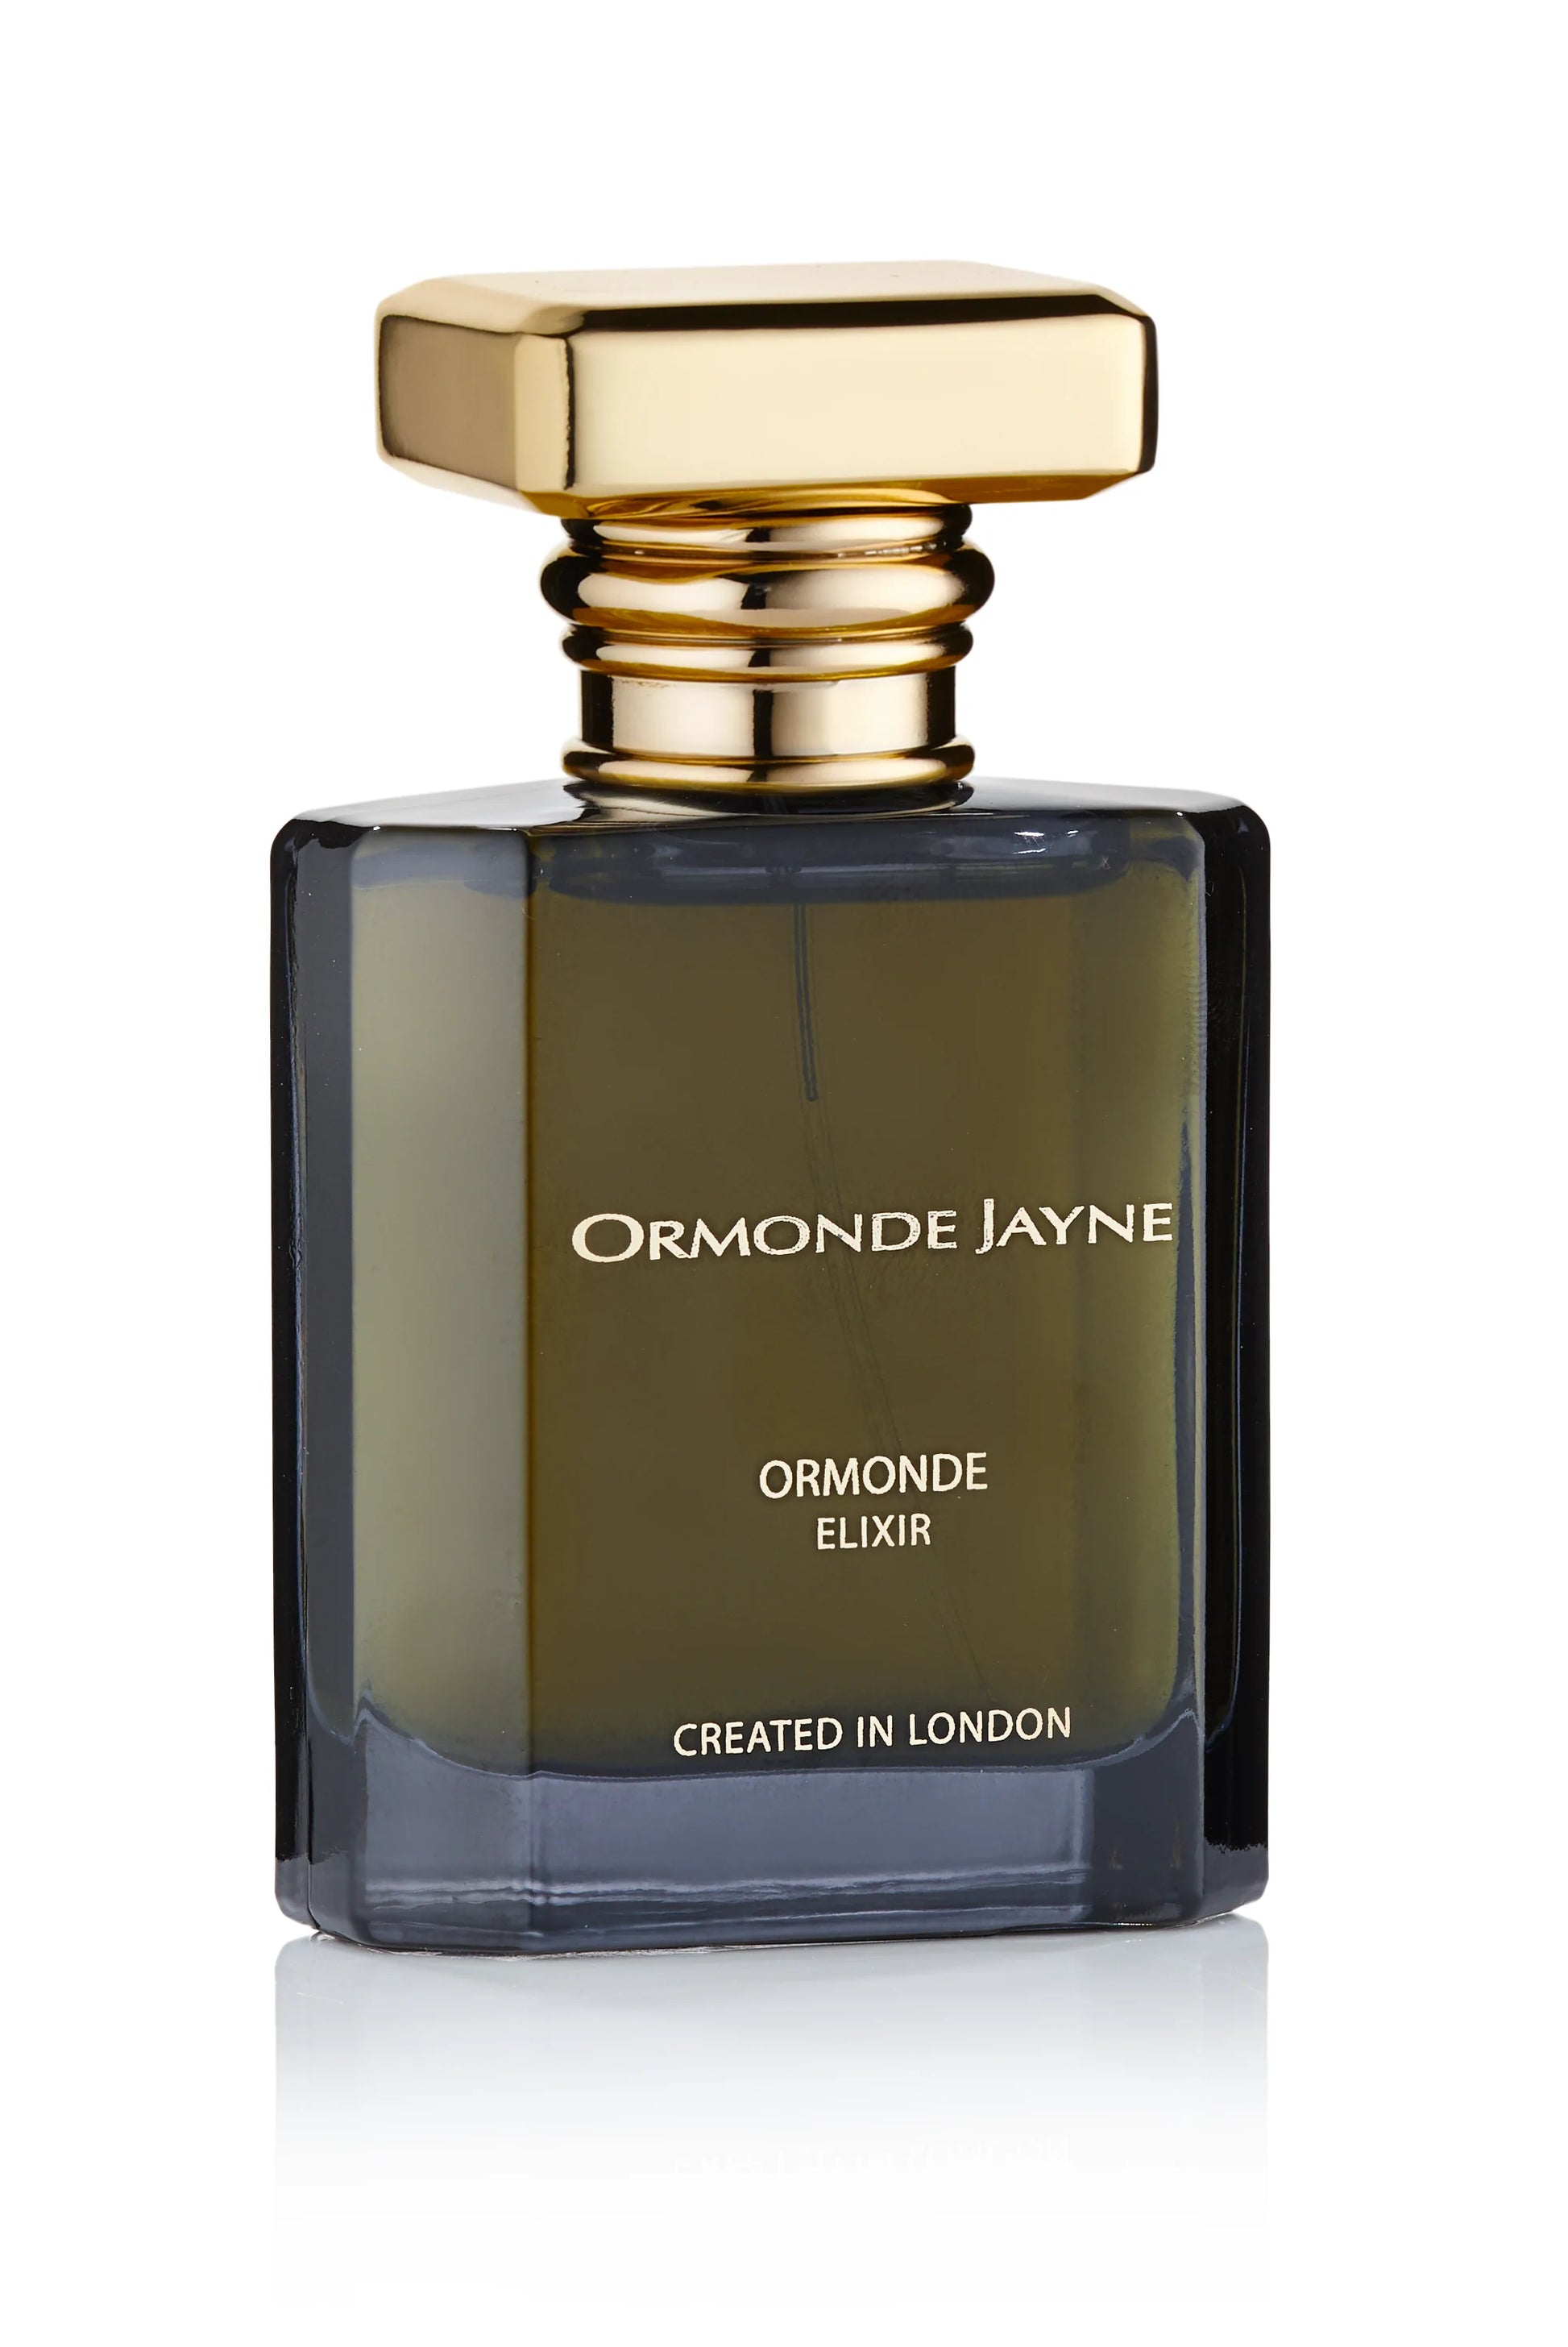 Ormonde Jayne Ormonde Elixir 2ml 0.06 fl. oz virallinen tuoksunäyte